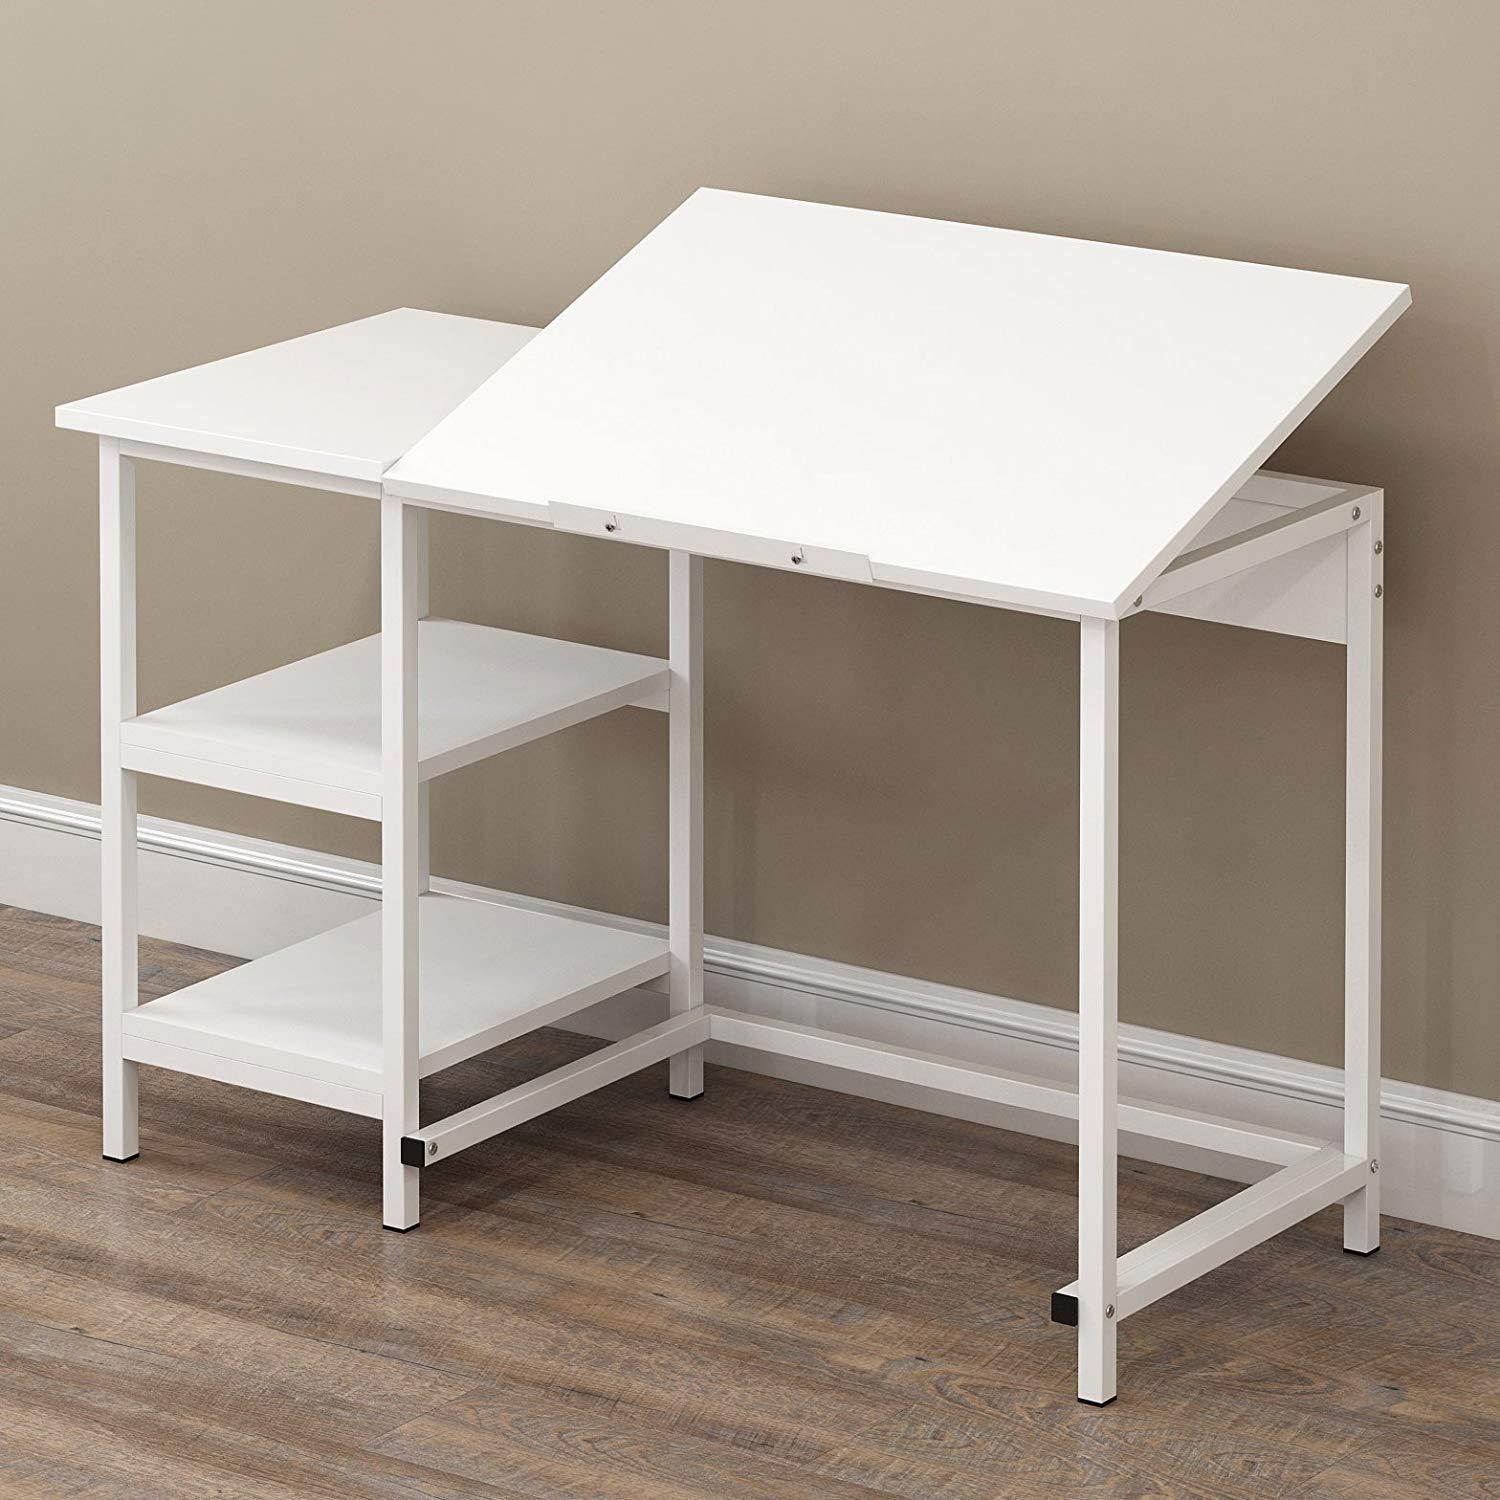 Atelier Adjustable Desk with Shelves in White